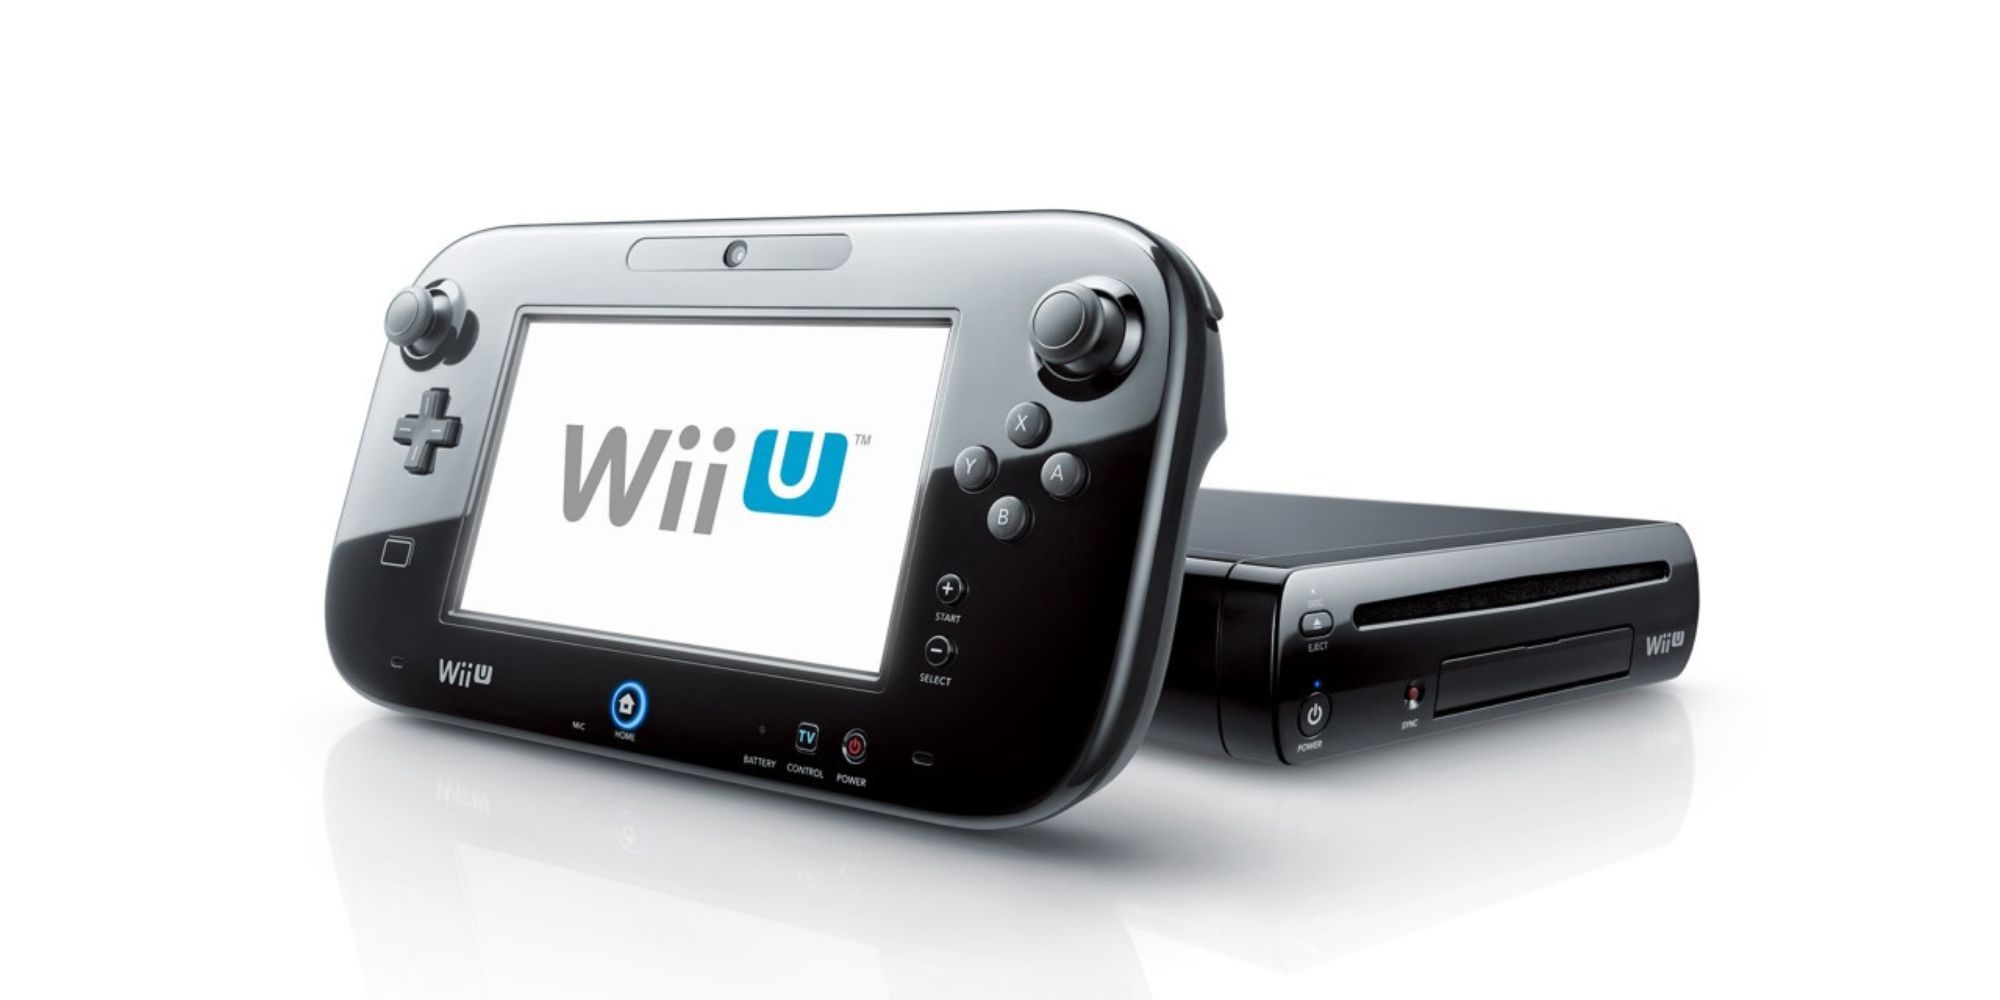 Wii U nintendo console and gamepad